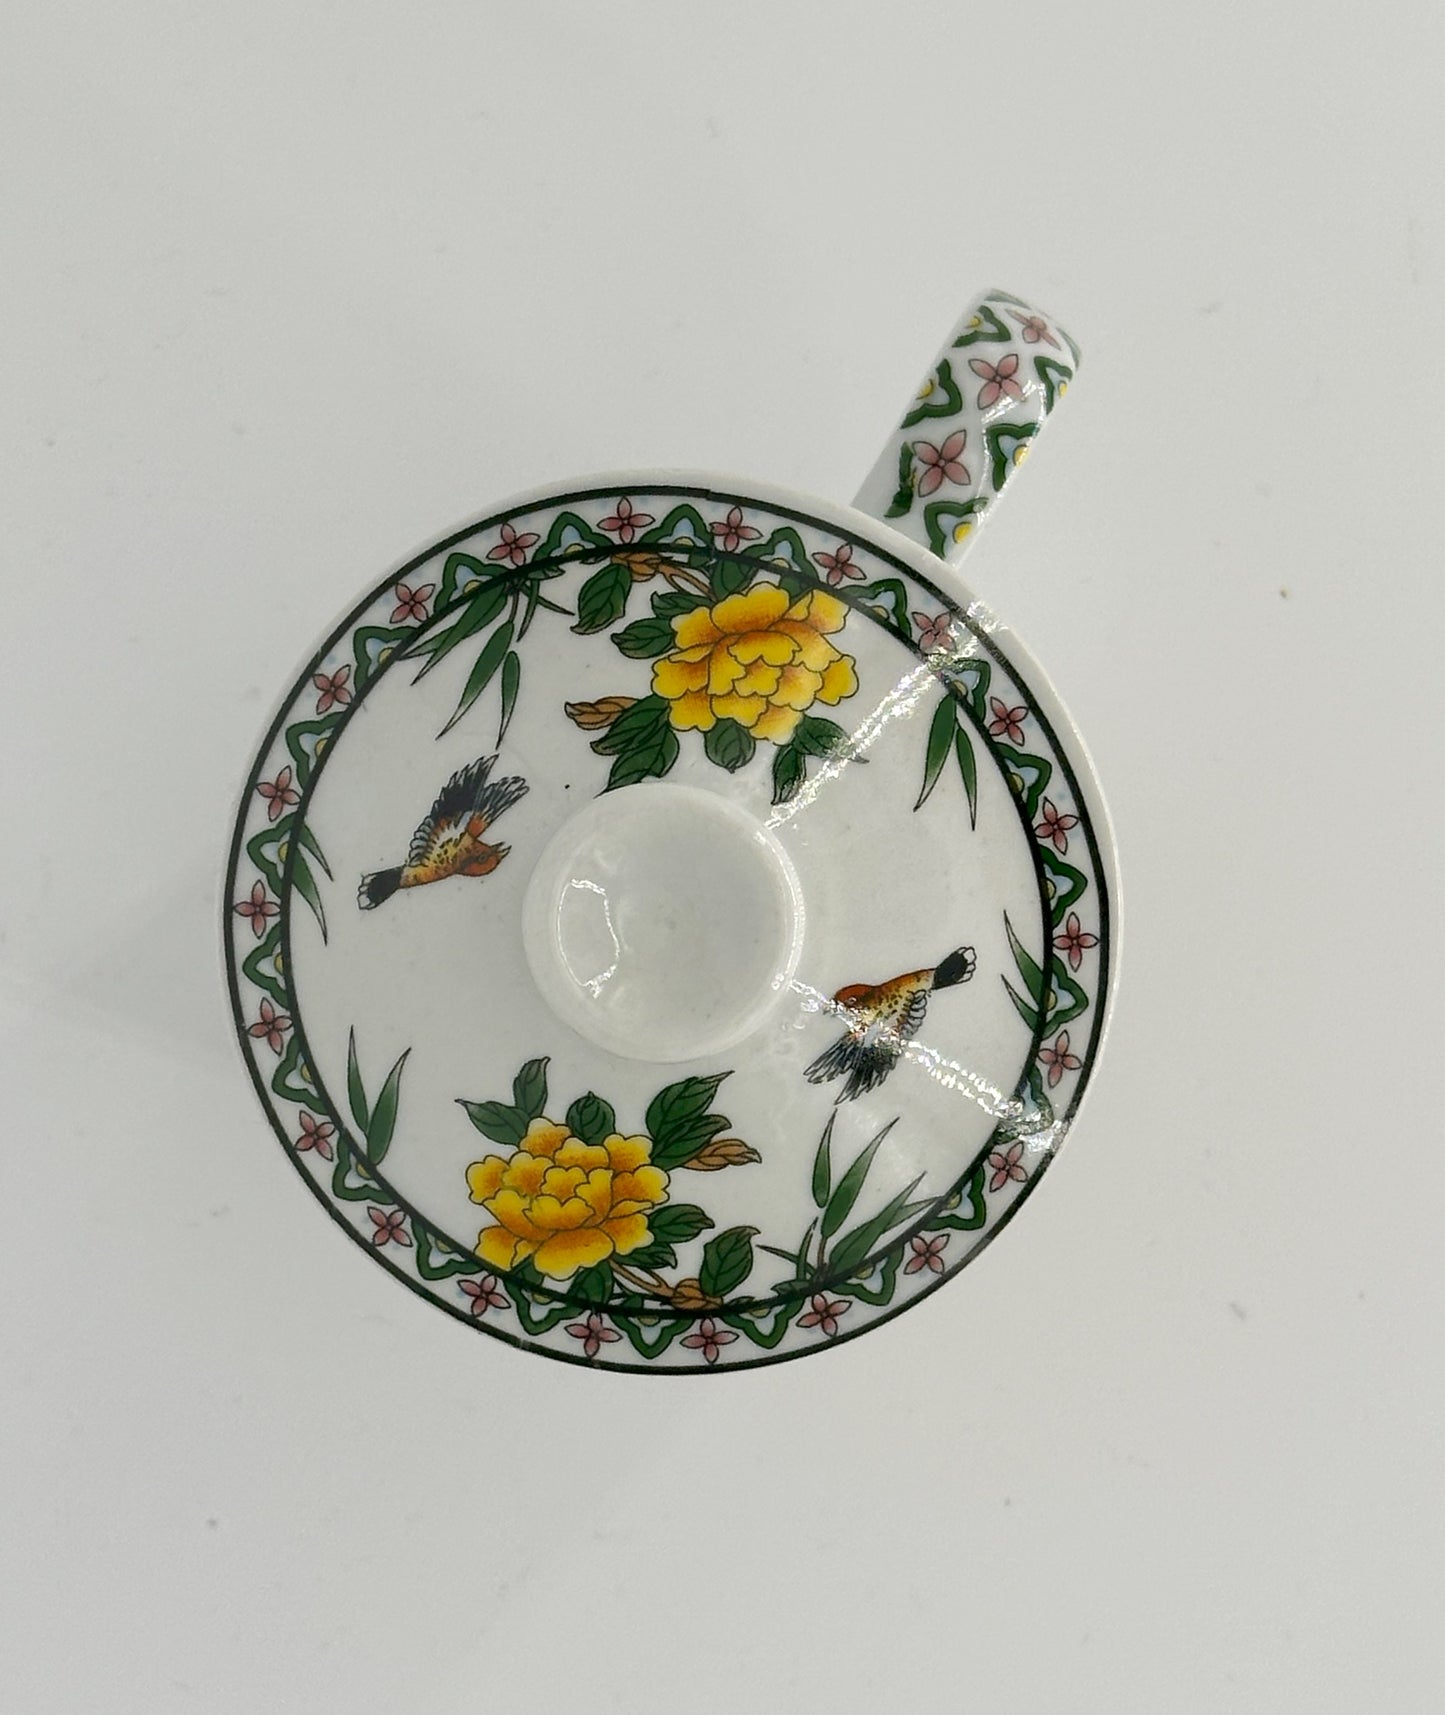 Peacock - Ceramic Art Tea Mug